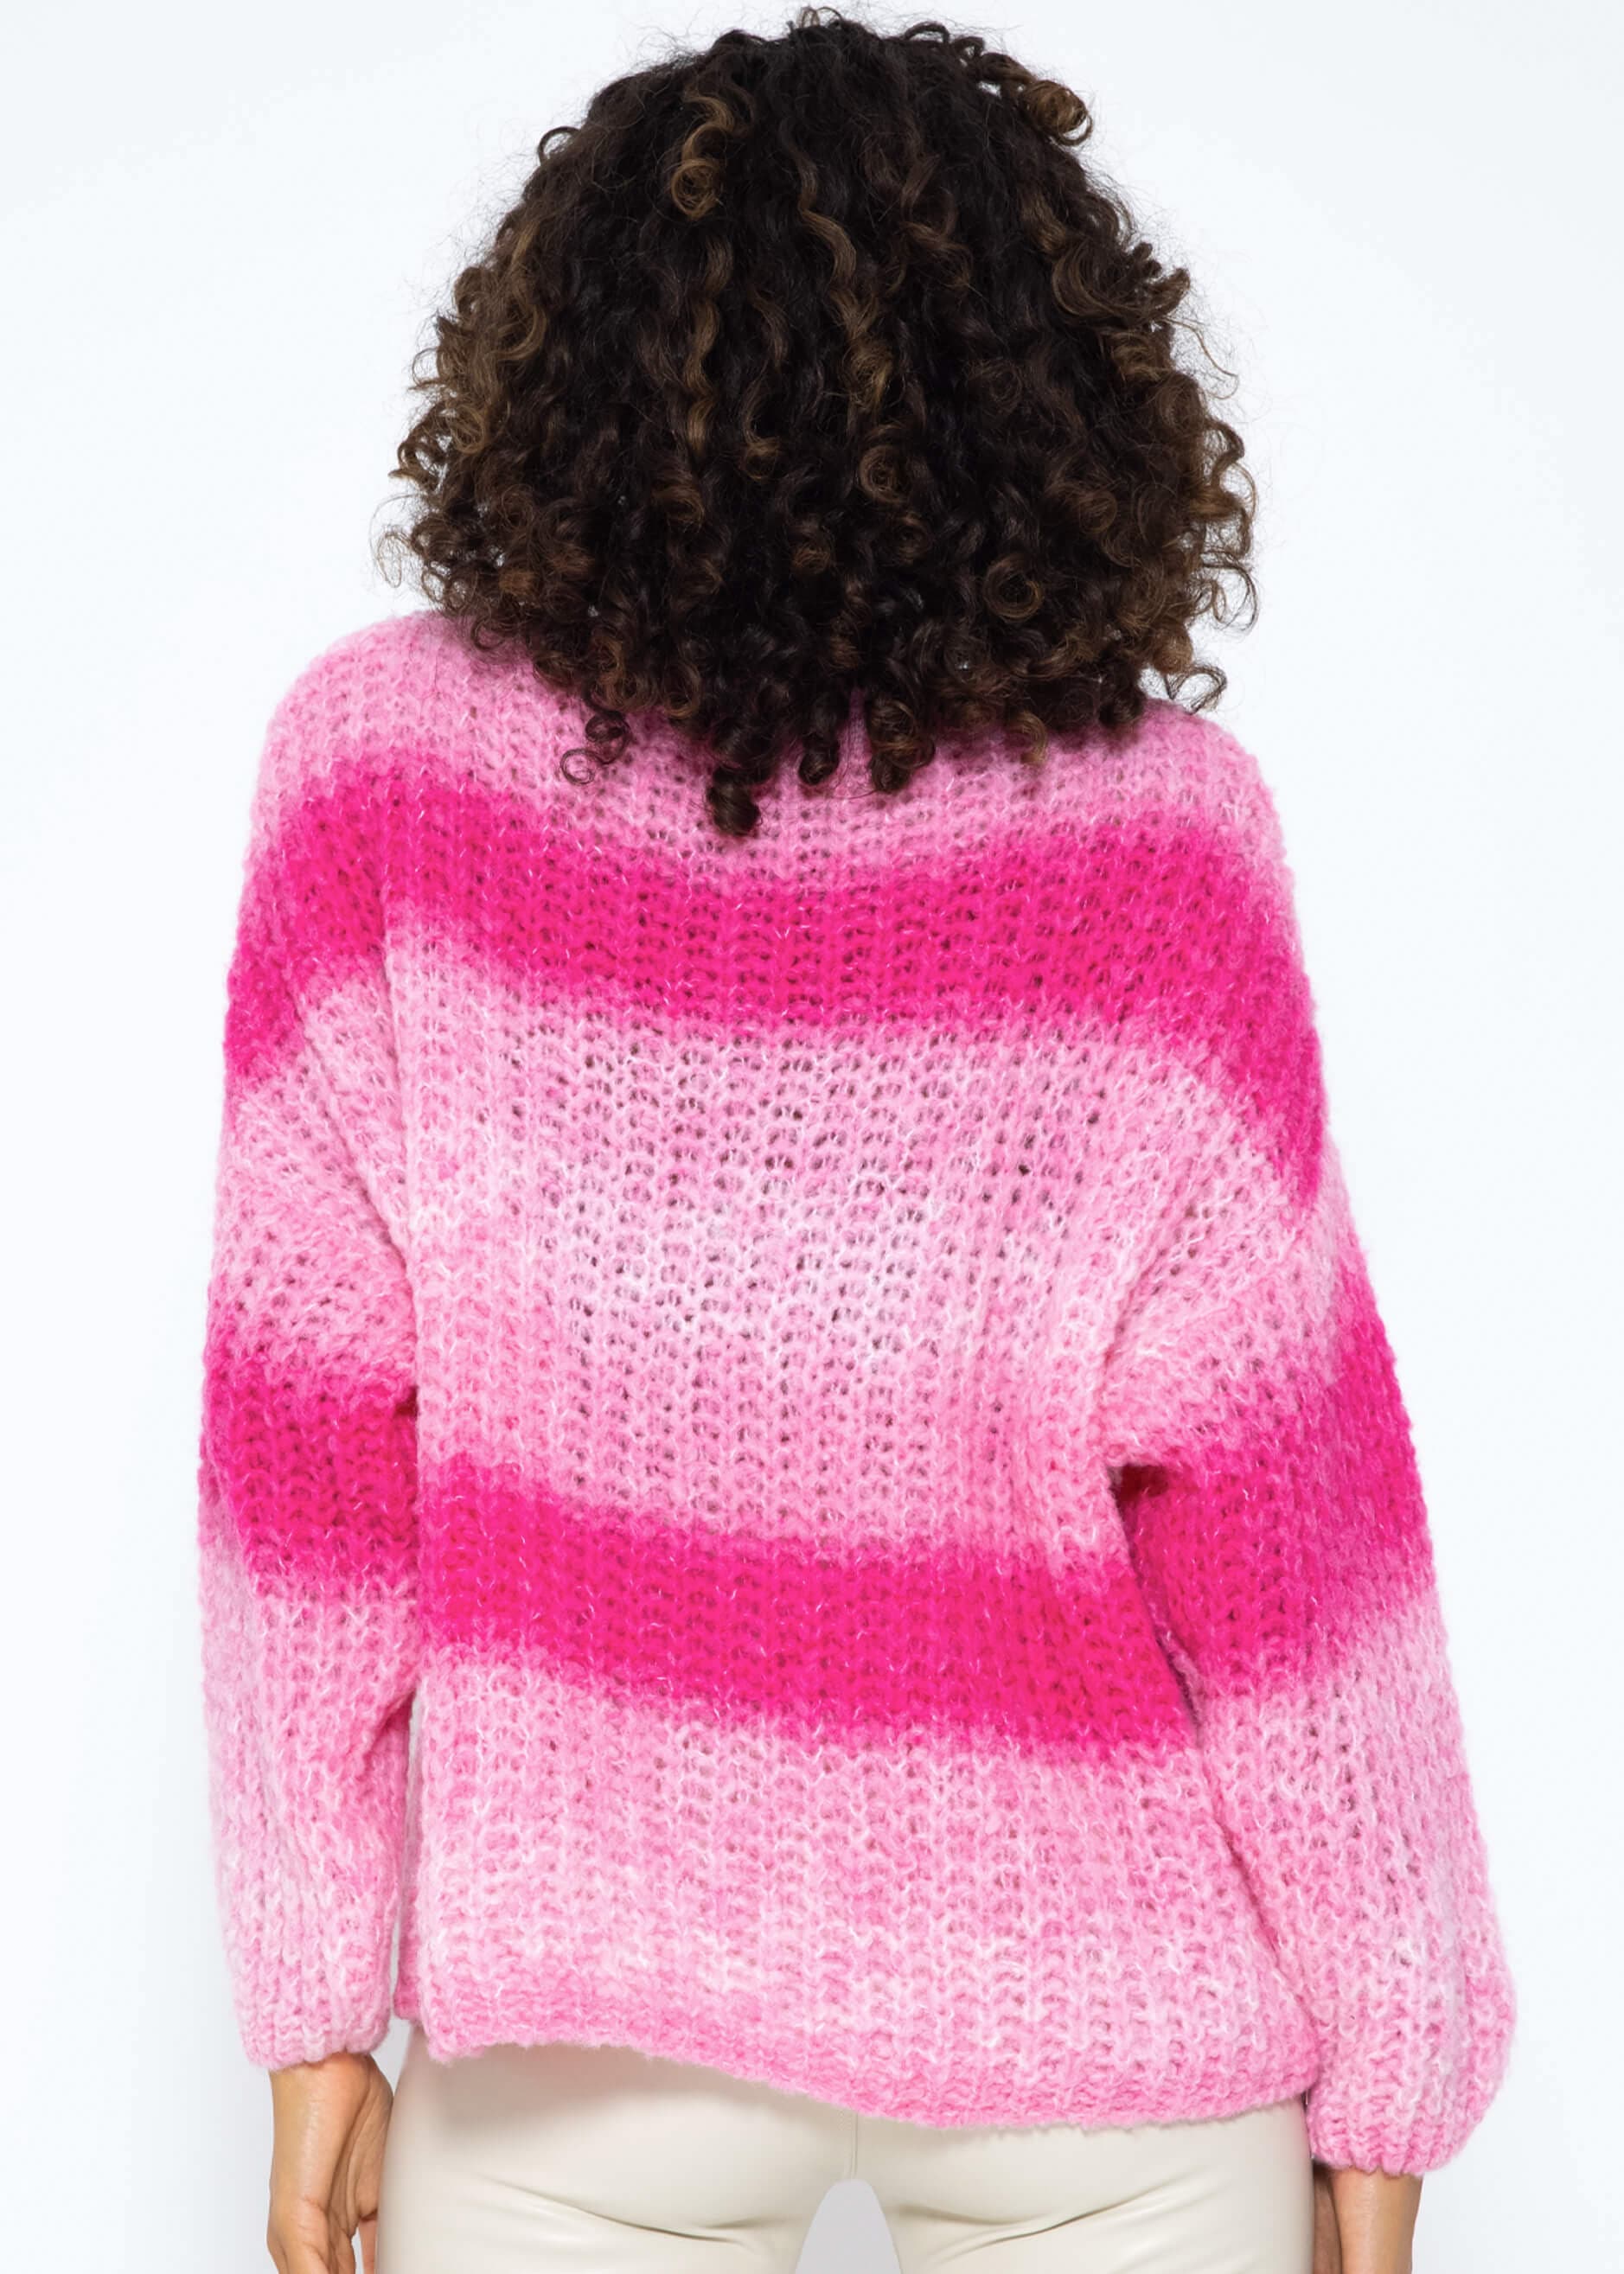 | | - | Bekleidung mit Pullover Strickpullover rosa SASSYCLASSY Farbverlauf